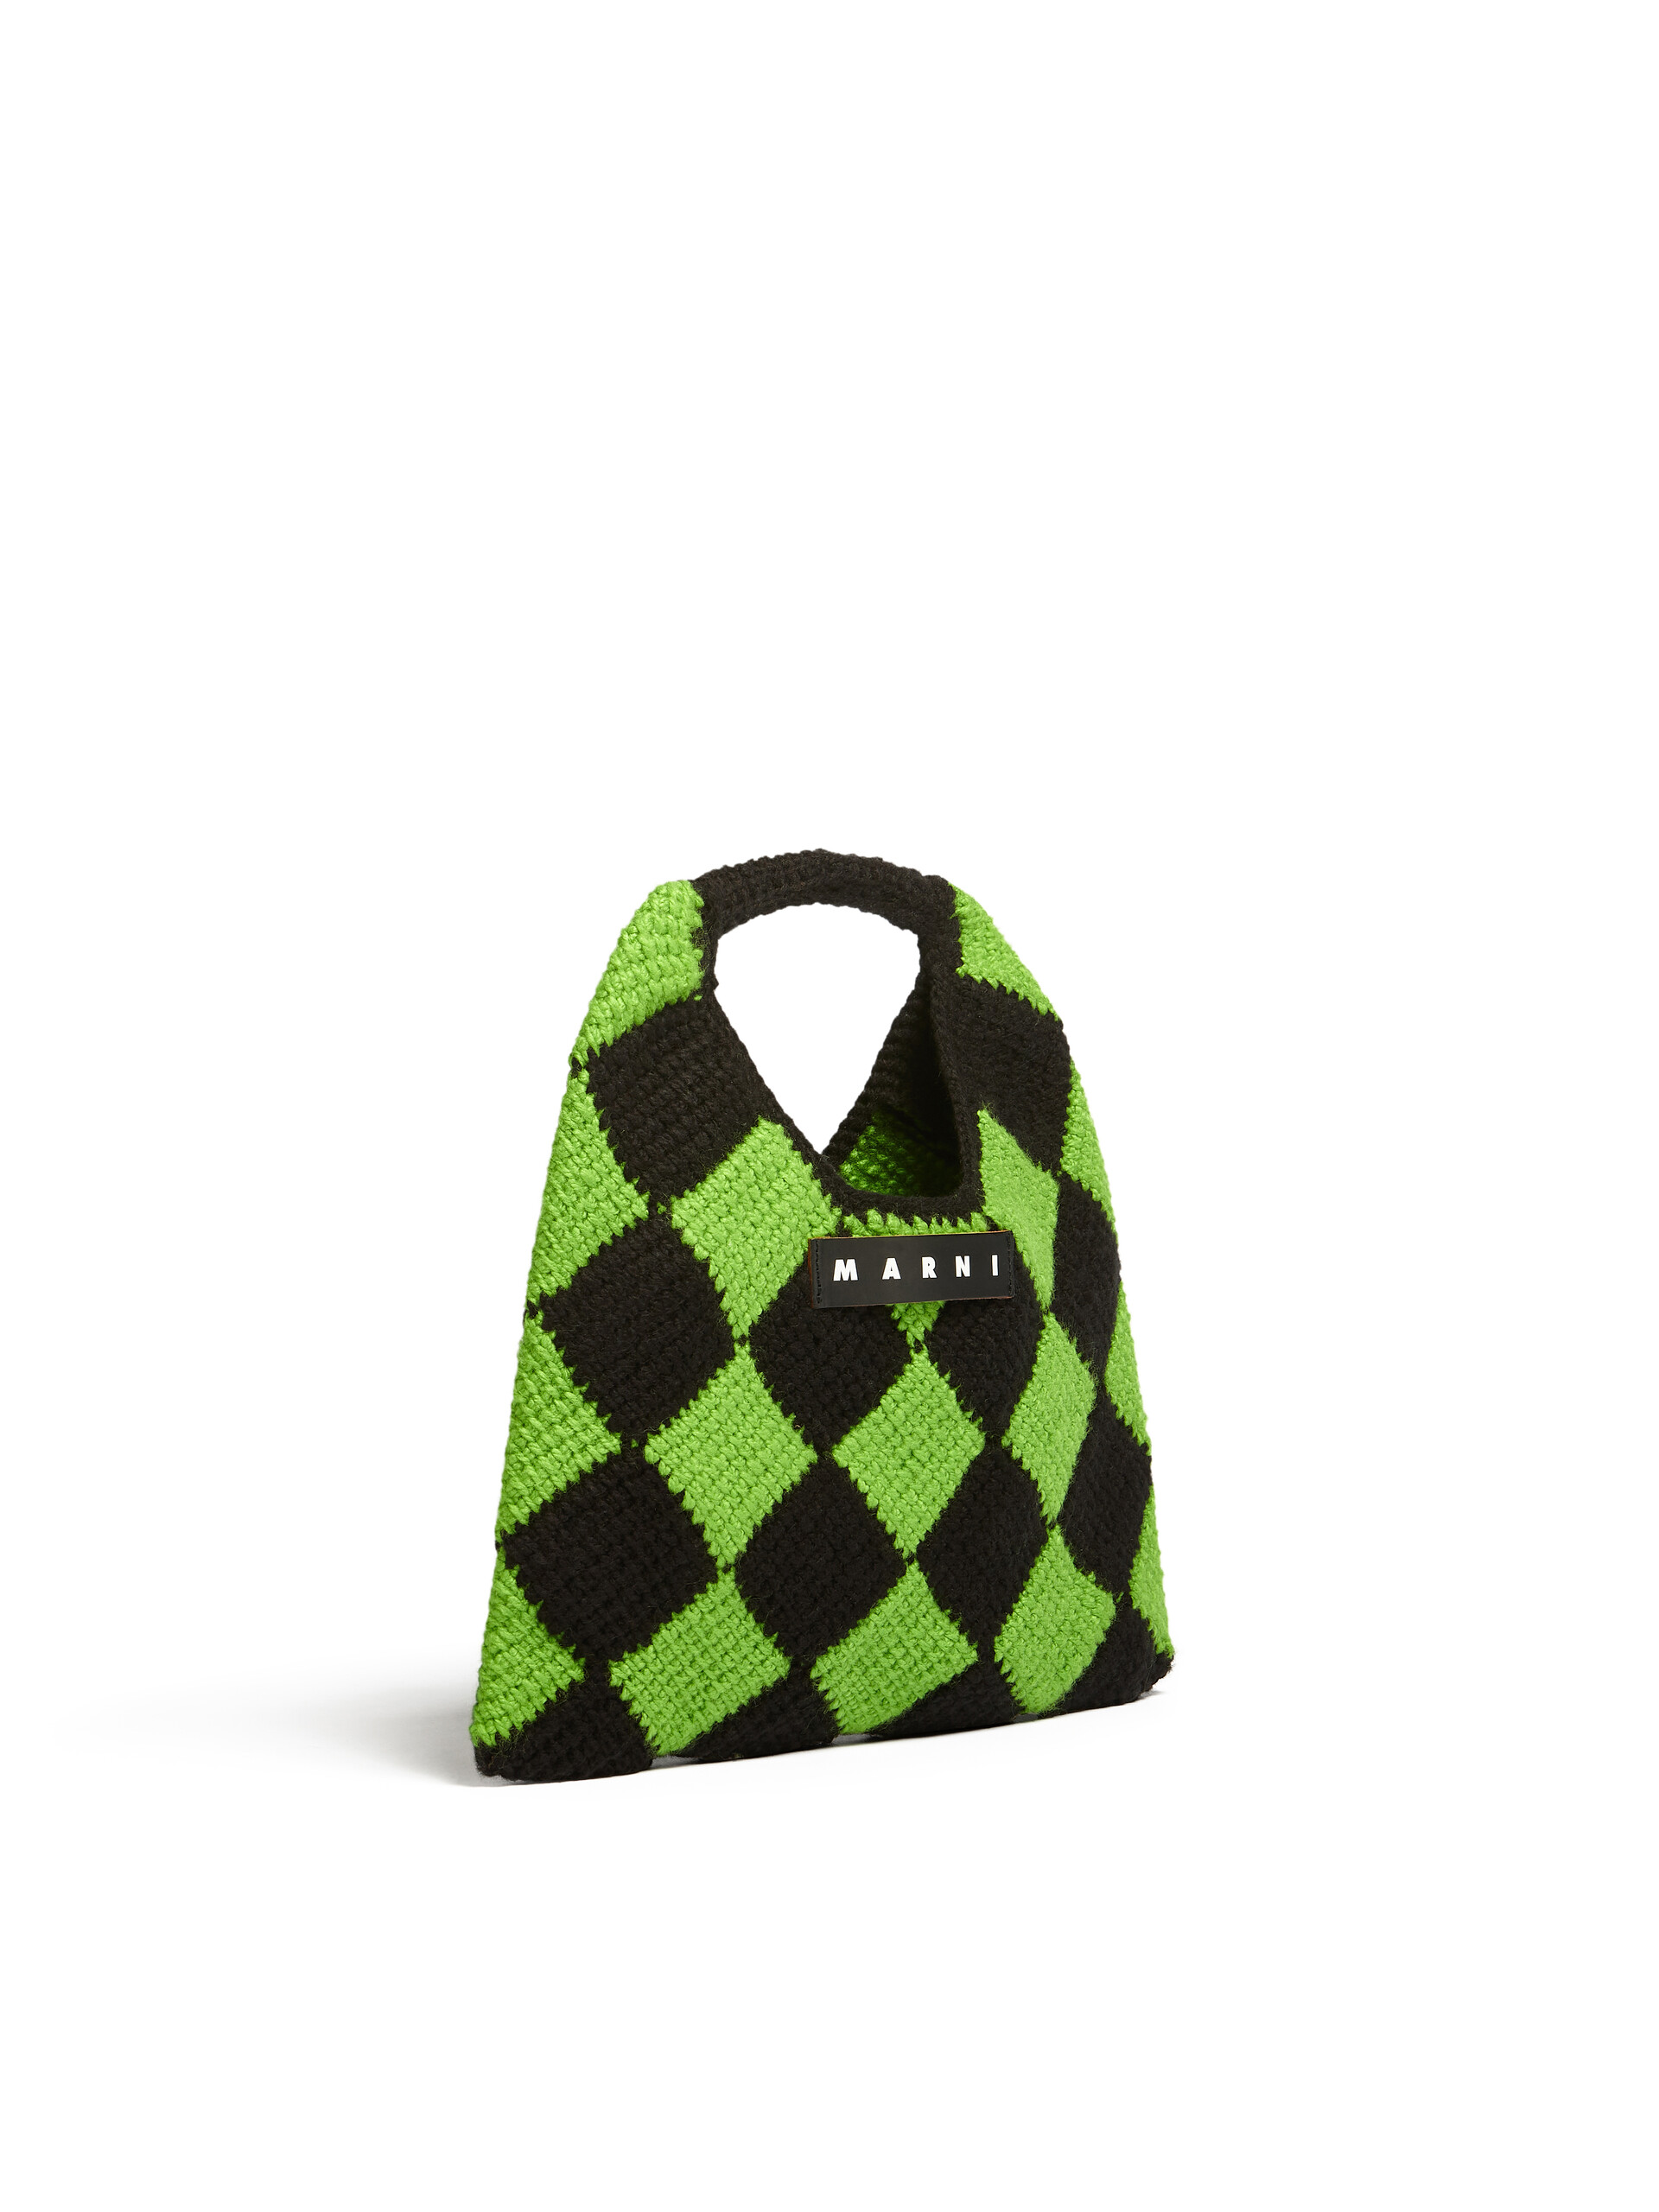 MARNI MARKET DIAMOND medium bag in green and black tech wool - Shopping Bags - Image 2